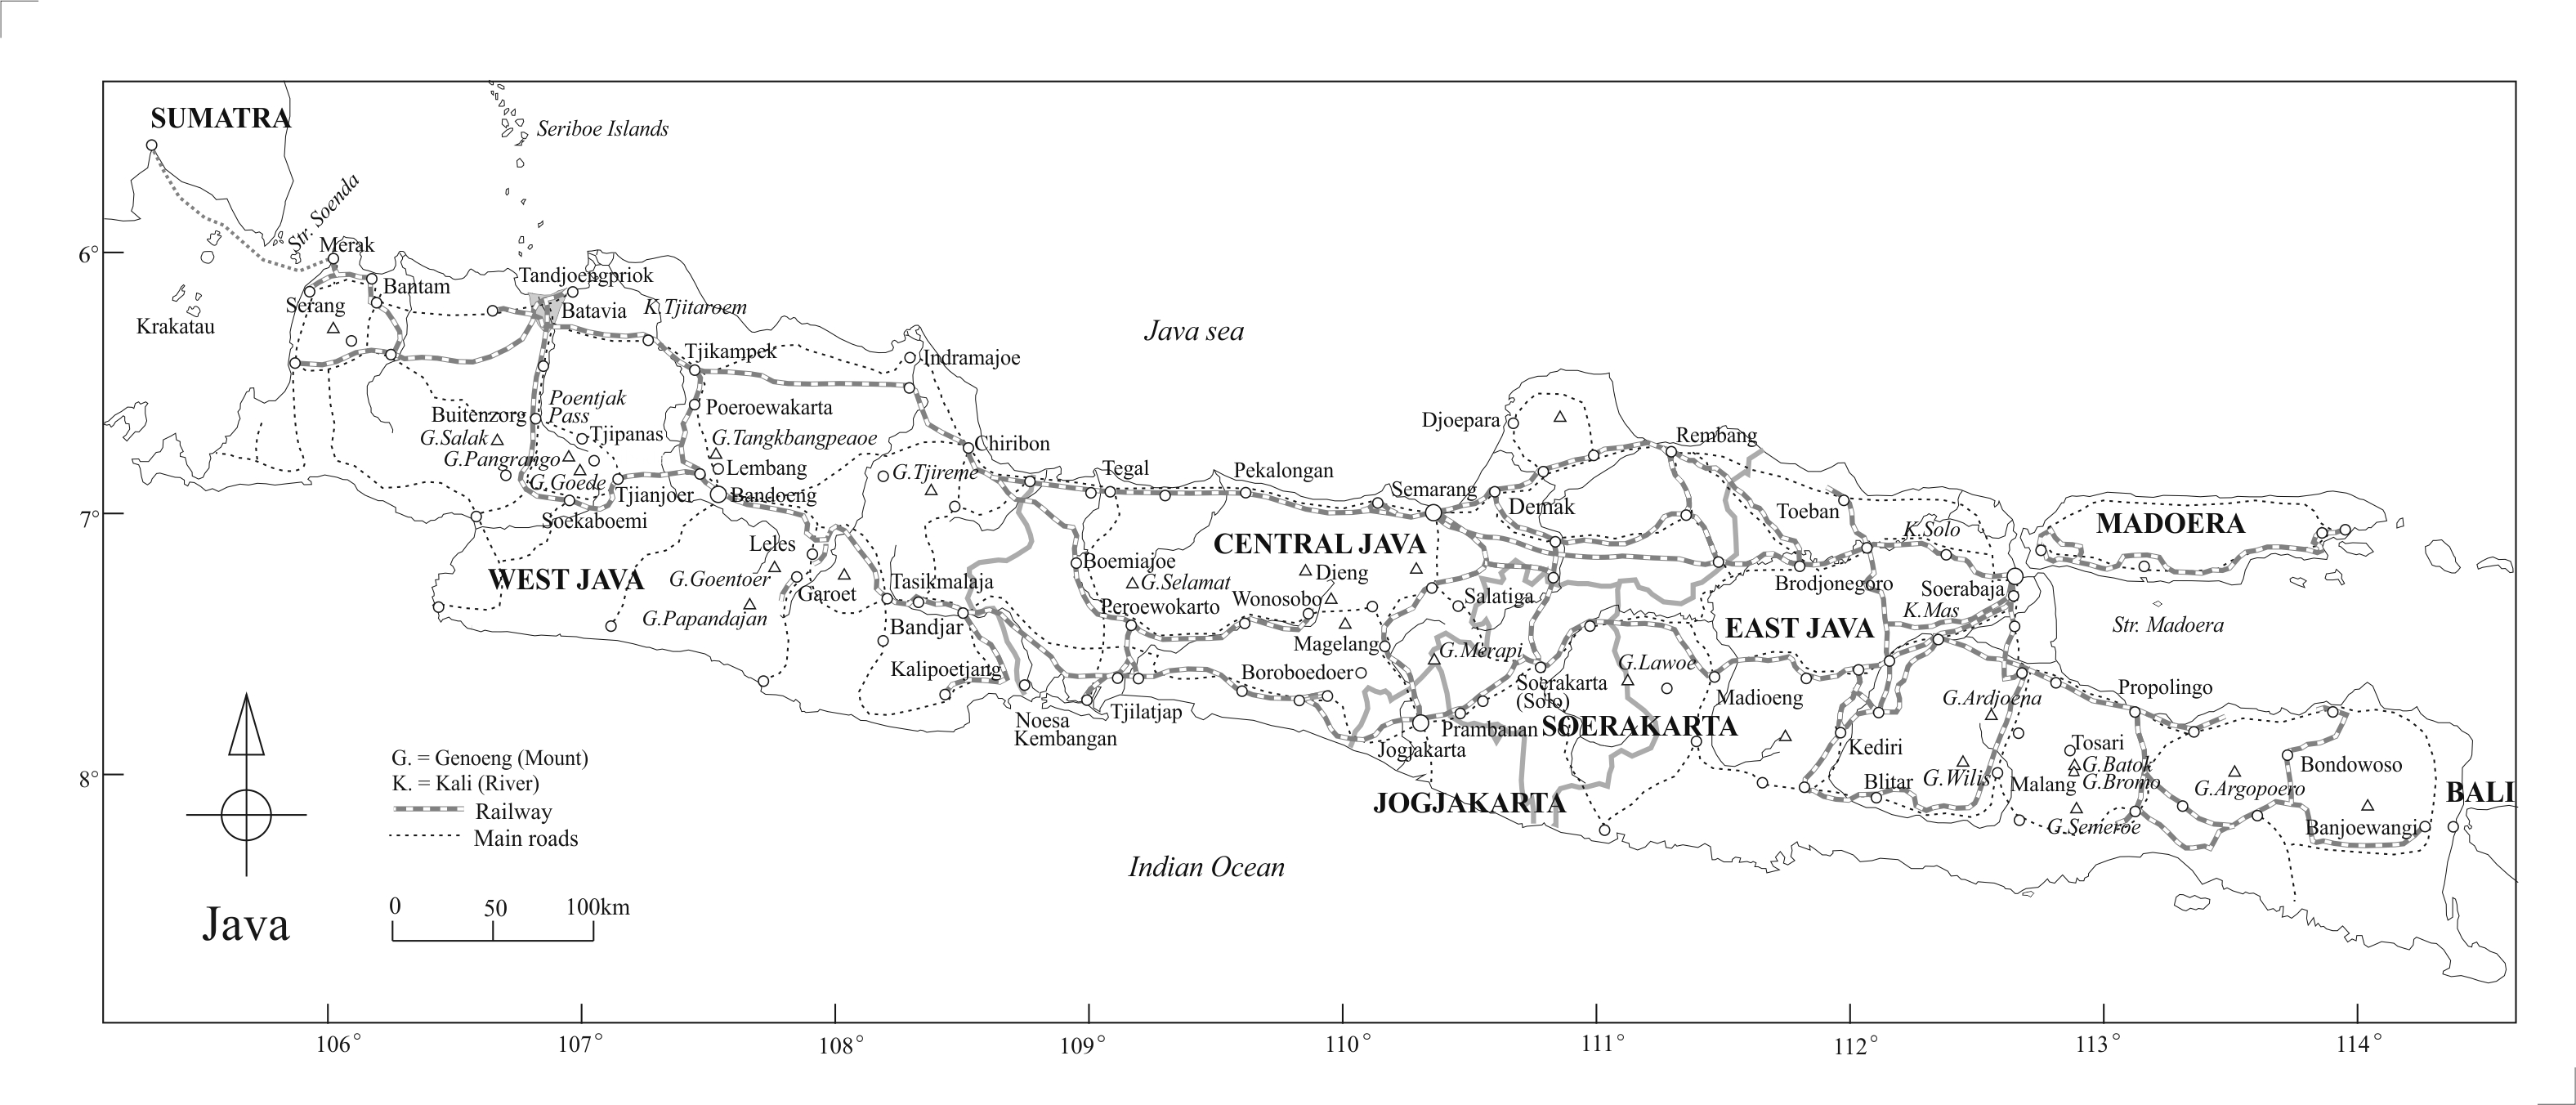 Java map based on Knol, K. G. et al., Kaart en Tekst, eerste Atlas van Nederlandsch-Indie voor de Indishe Lagere School, Groningen-Batavia, 1938.